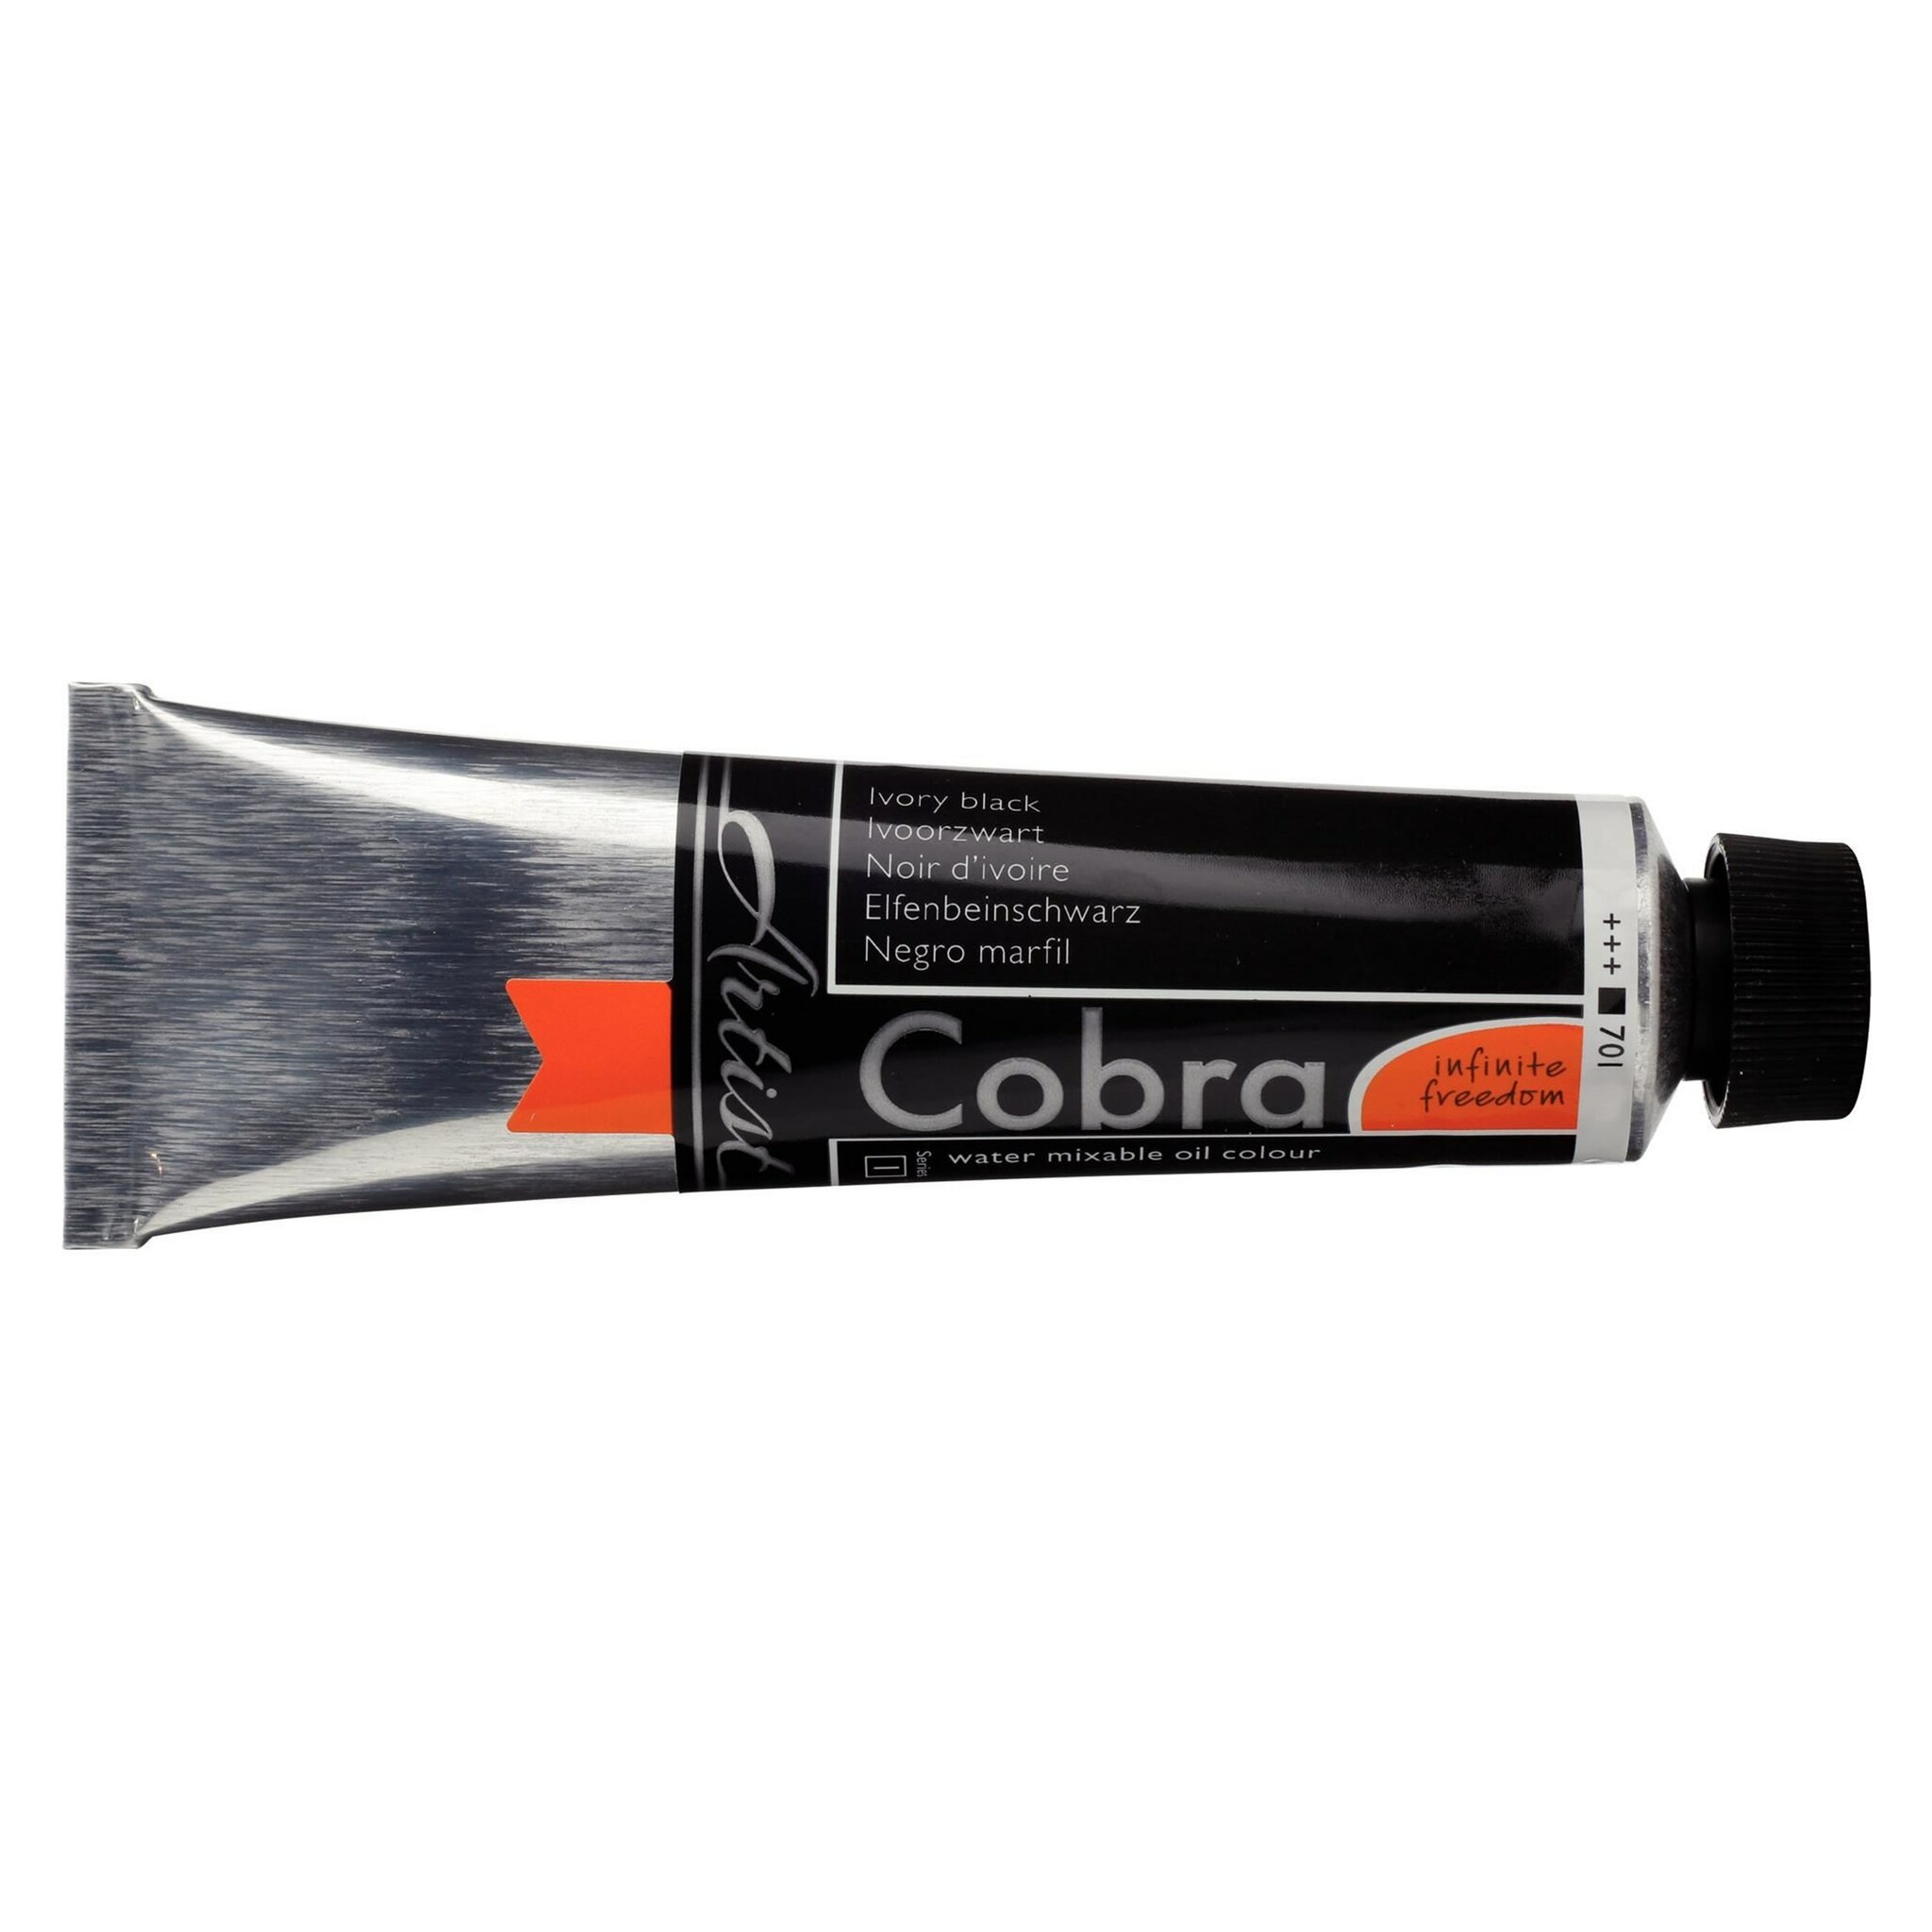 Cobra-artist-40ml-701-ivory black